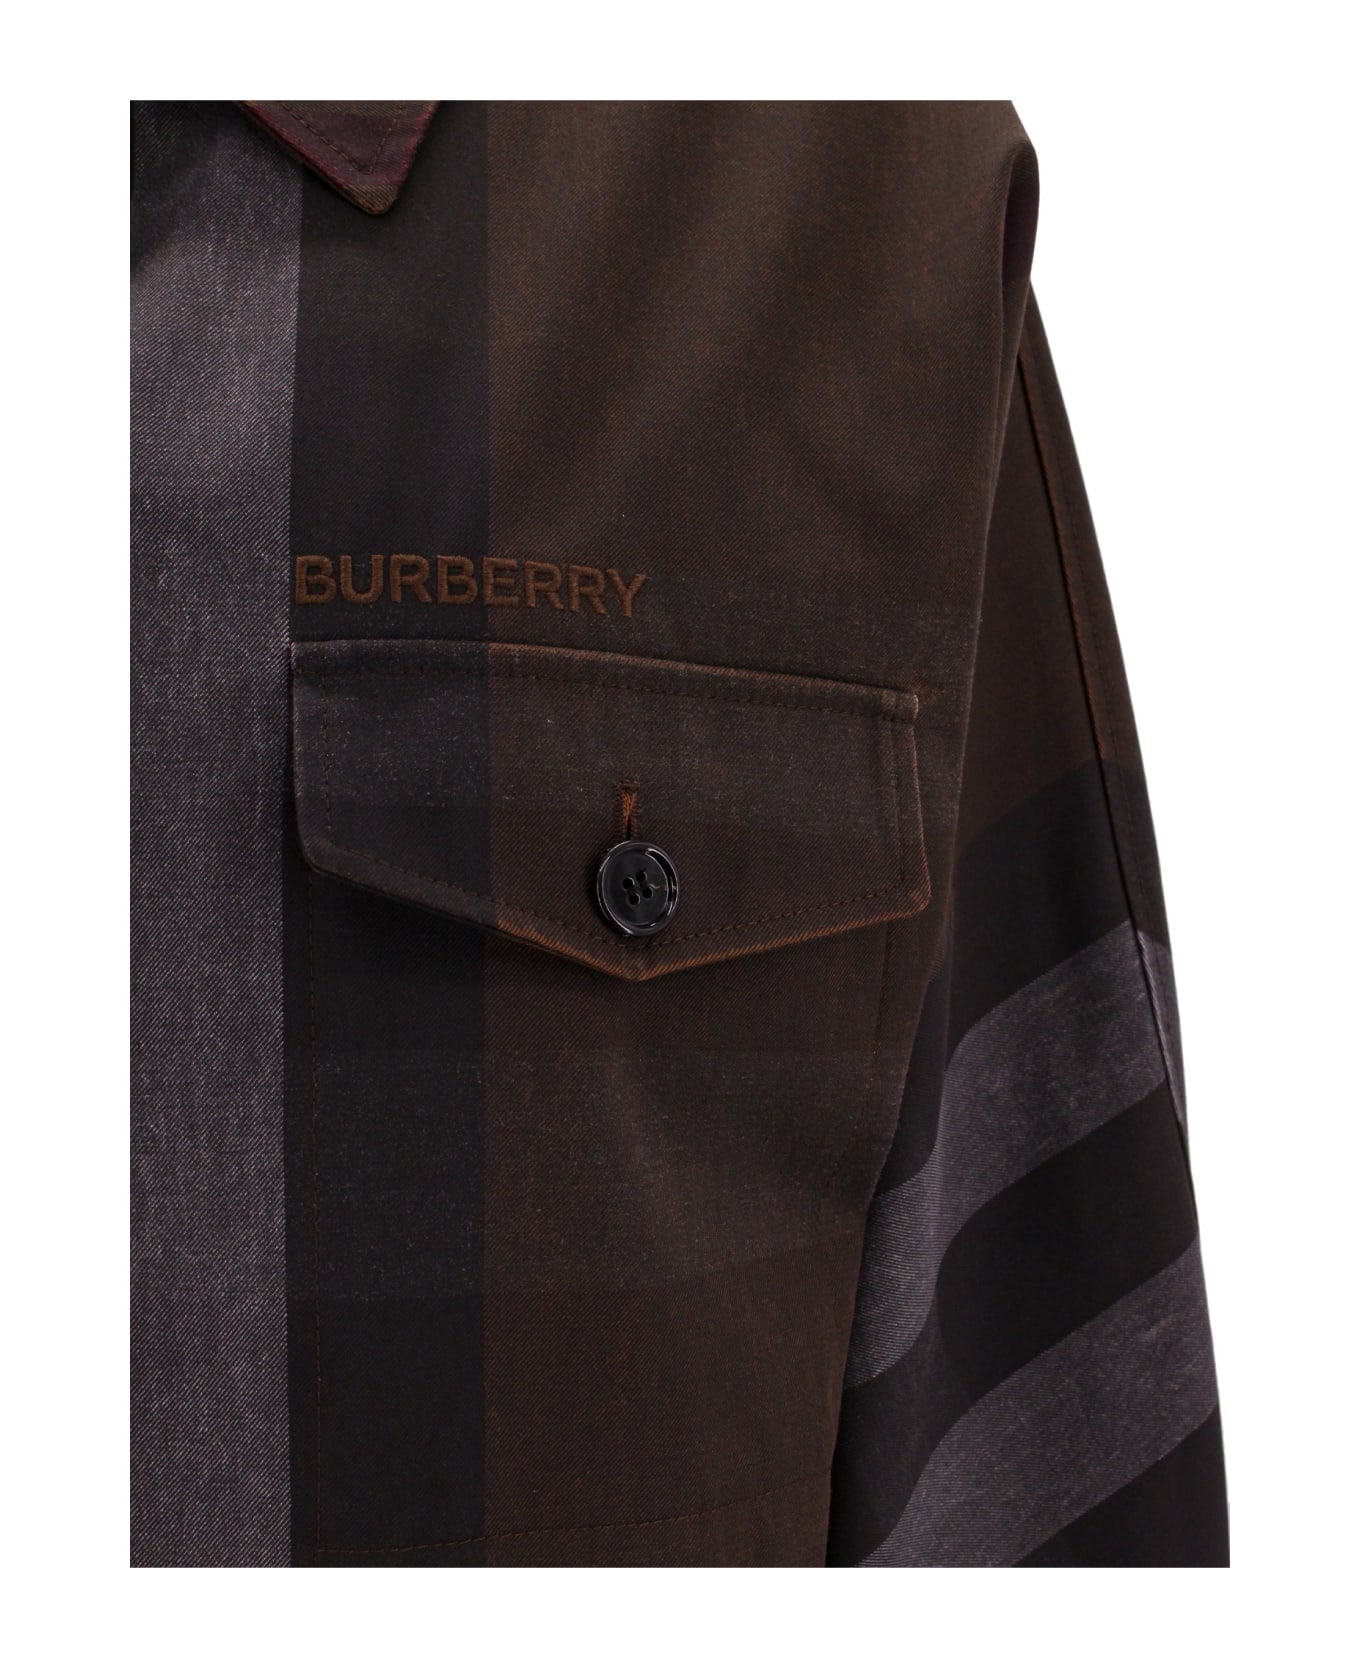 Burberry Jacket - Brown